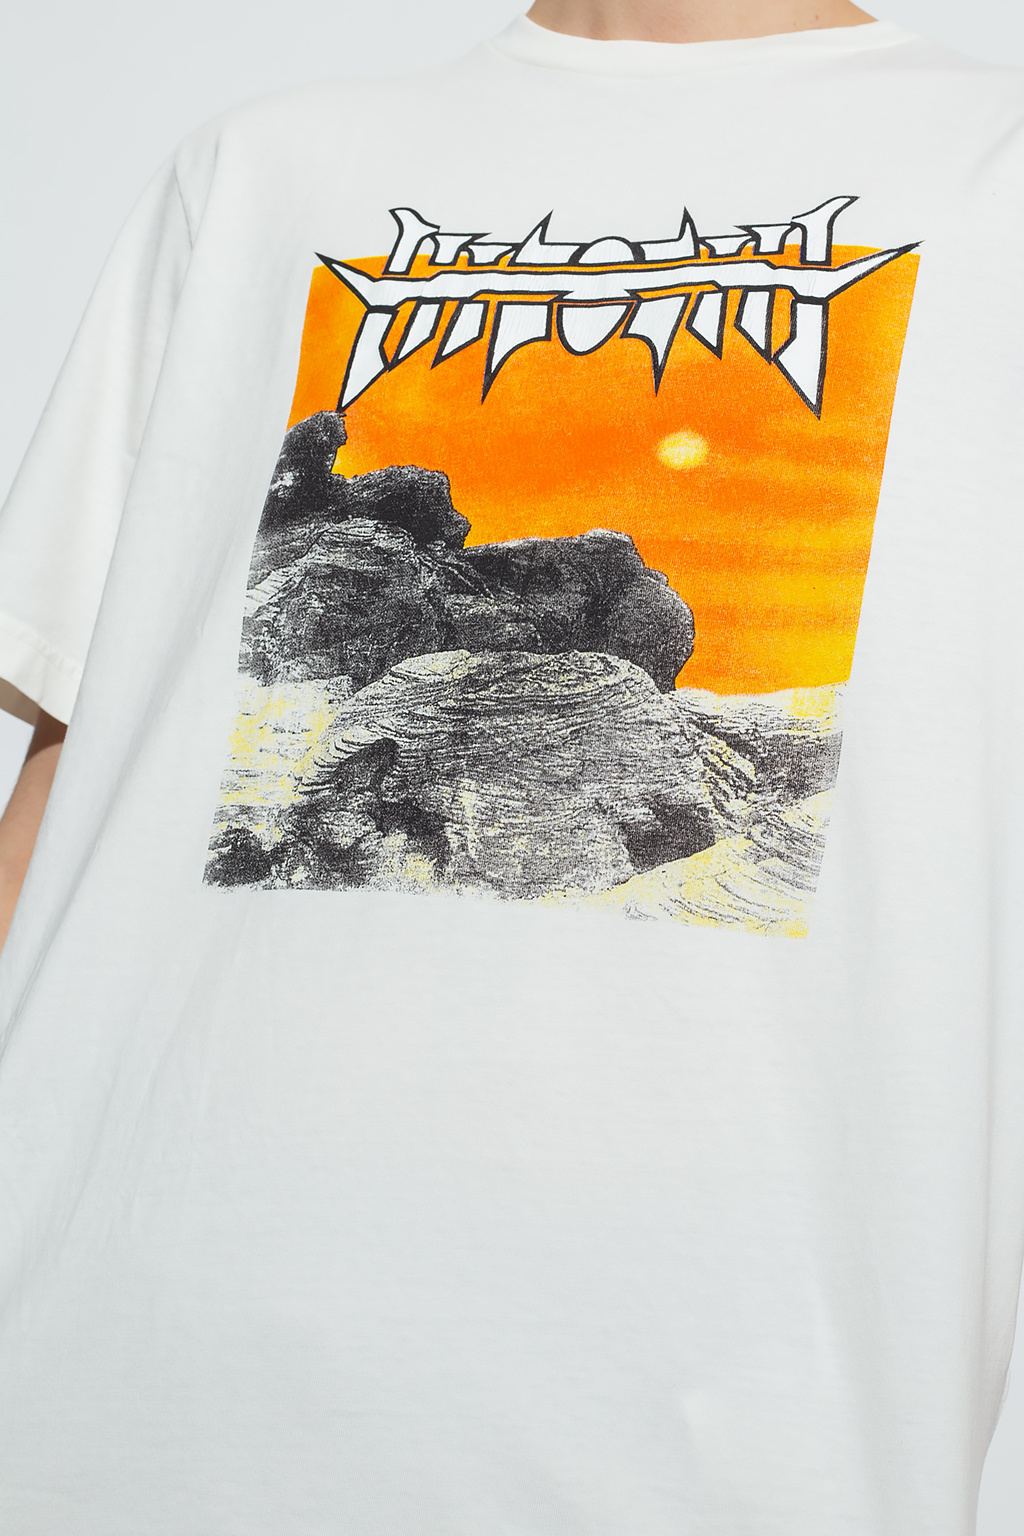 StclaircomoShops | Diesel 'T - Men's Clothing - Just' printed T | shirt -  vsct clubwear 2 on 1 t shirt anthracite melange white